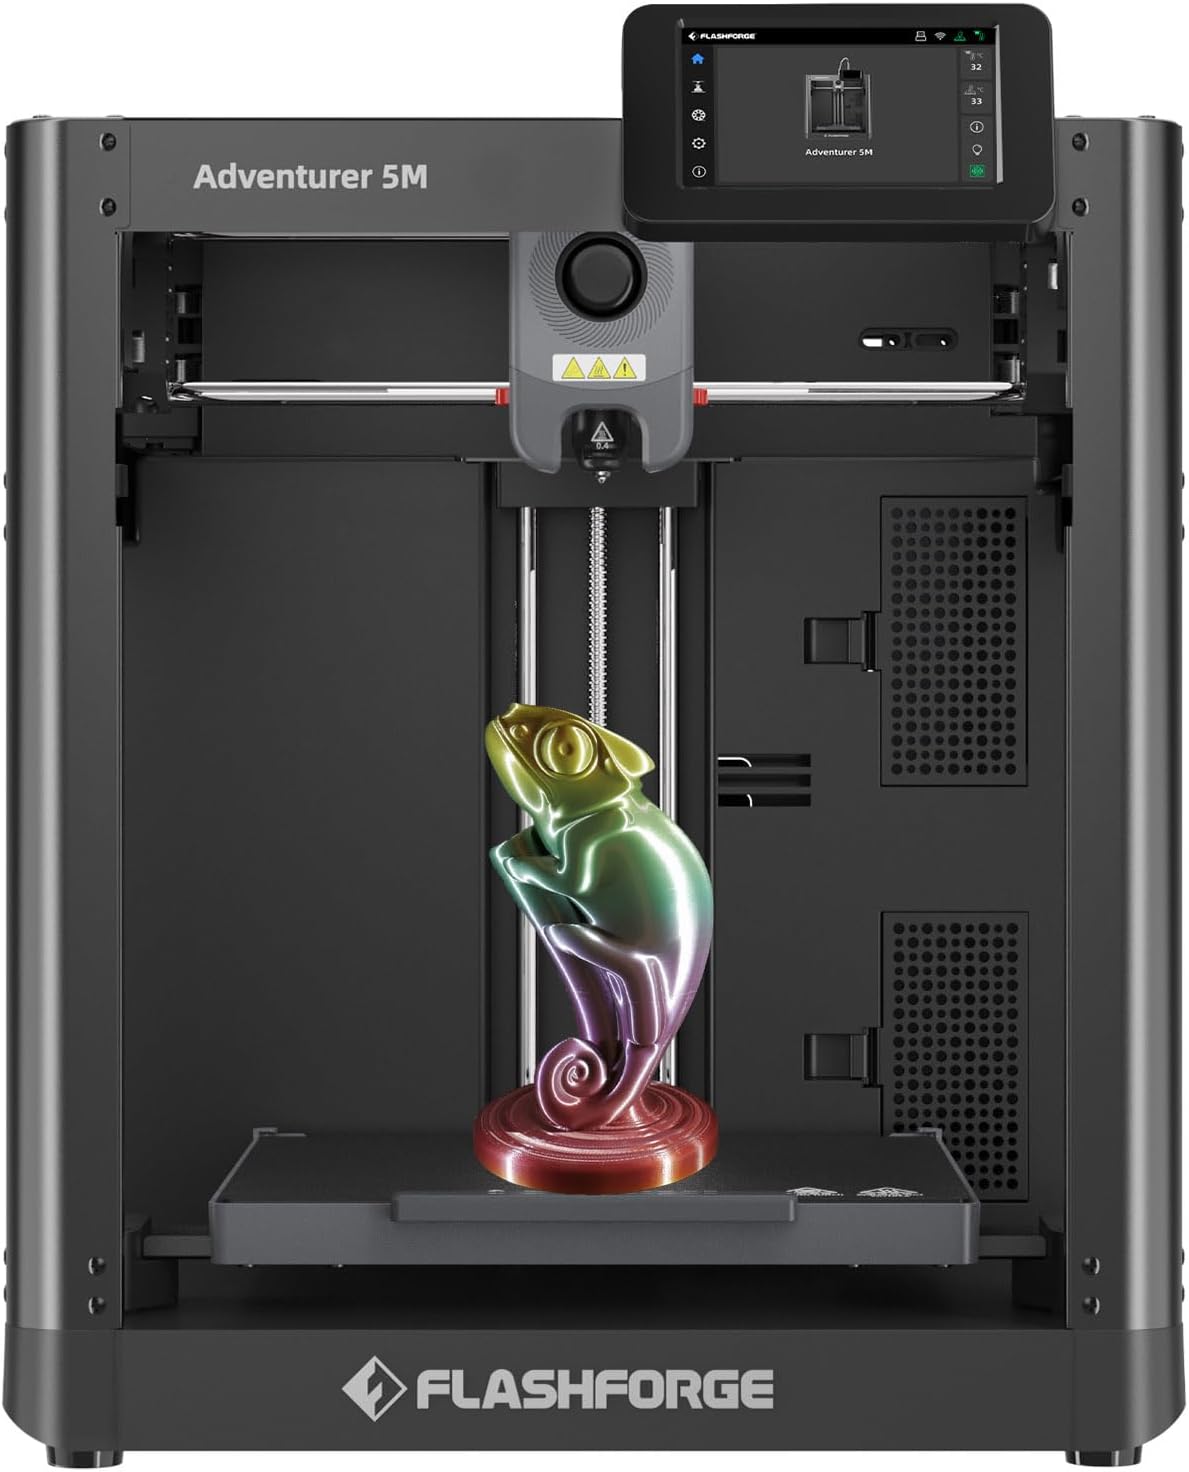 flashforge-adventurer-5m-3d-printer-600mms-max-high-speed-fdm-3d-printers-with-auto-leveling-direct-drive-extruder-quick High-Speed FDM 3D Printer Review